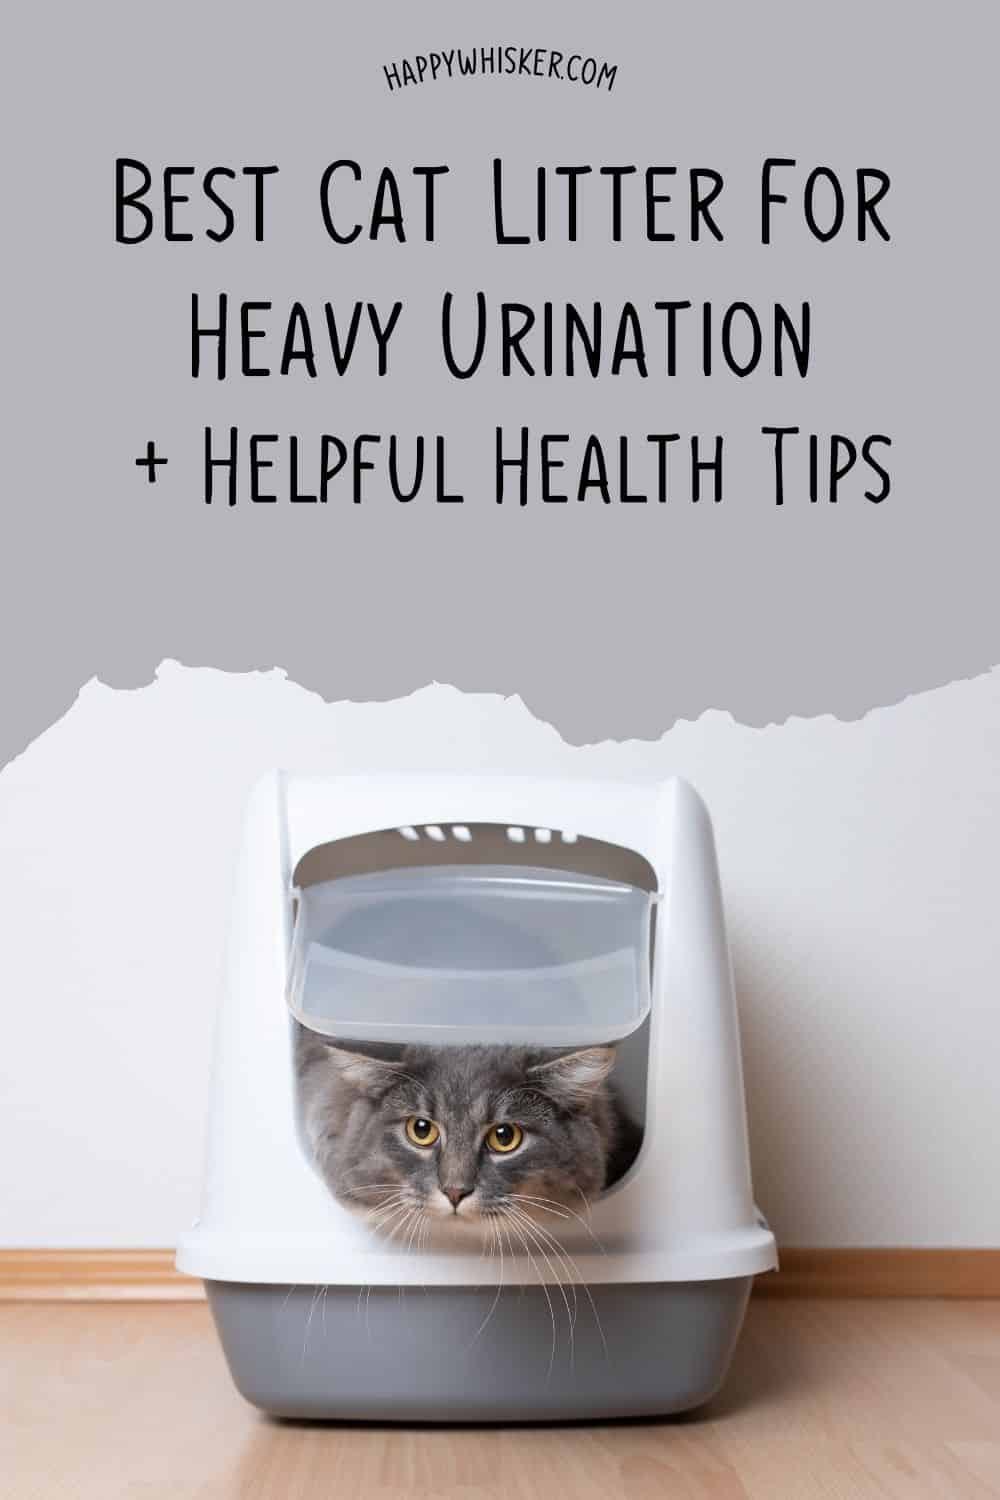 Best Cat Litter For Heavy Urination + Helpful Health Tips Pinterest